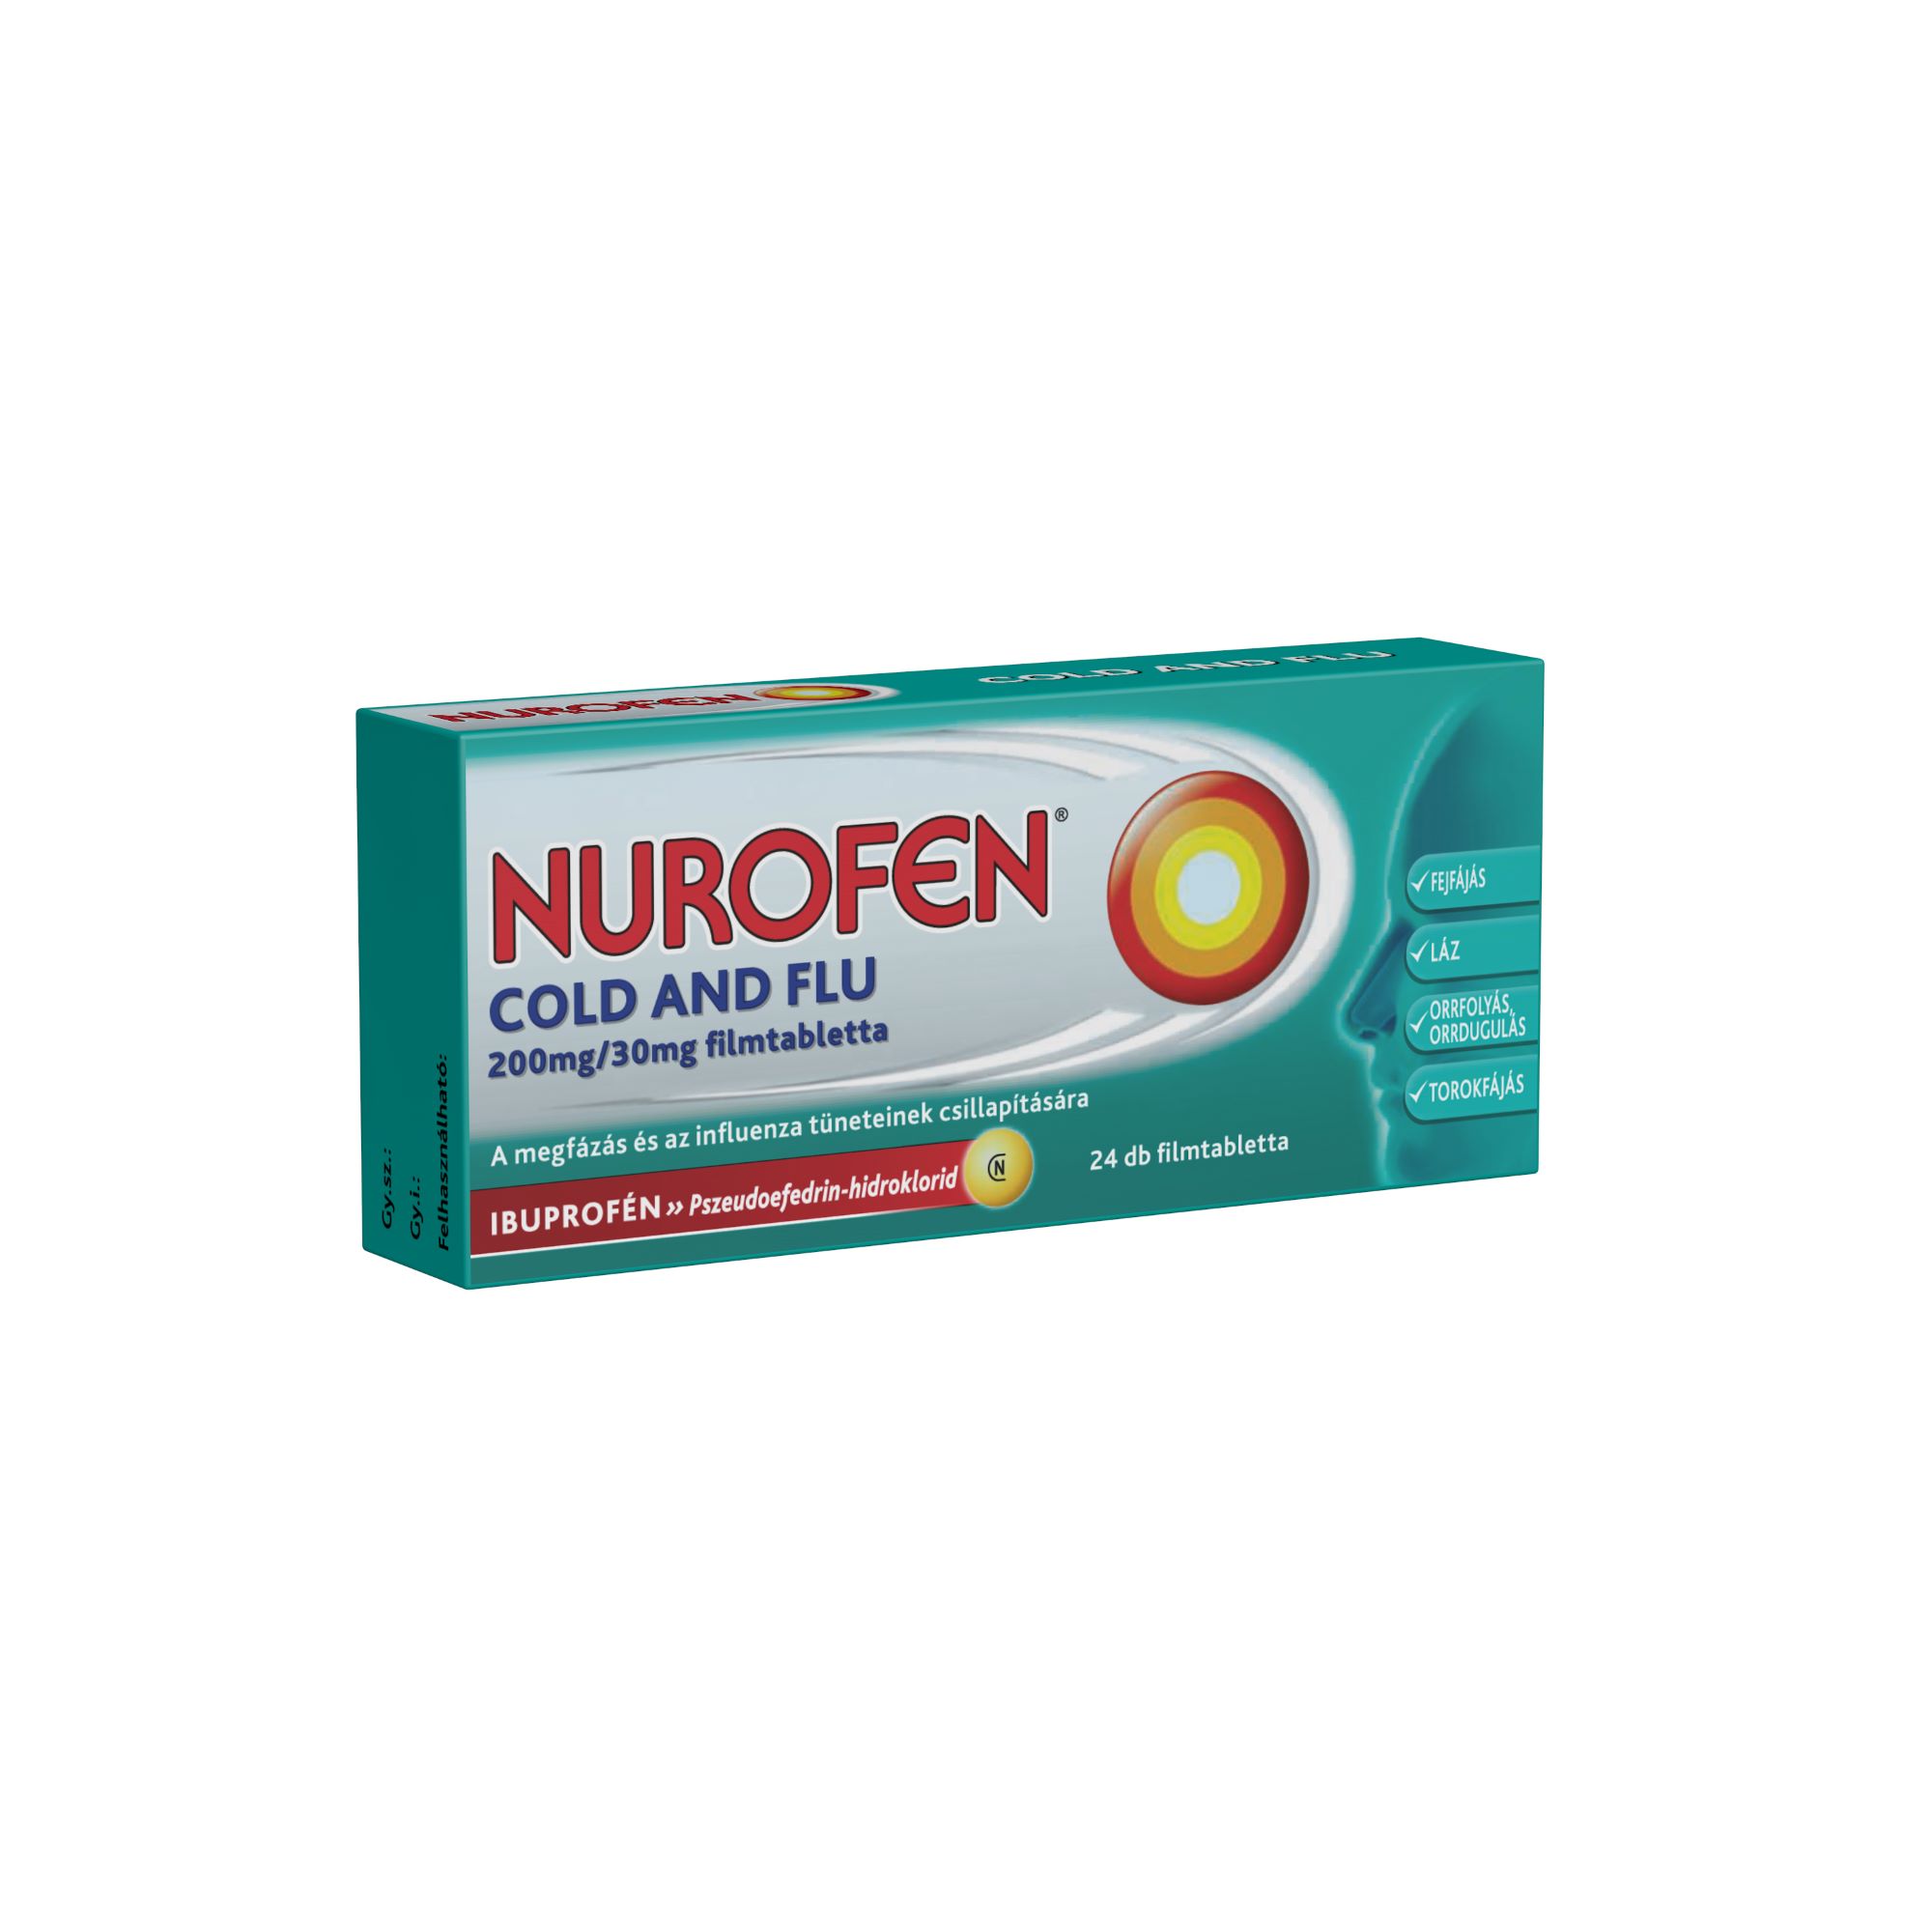 Nurofen Cold and Flu 200 mg / 30 mg filmtabletta